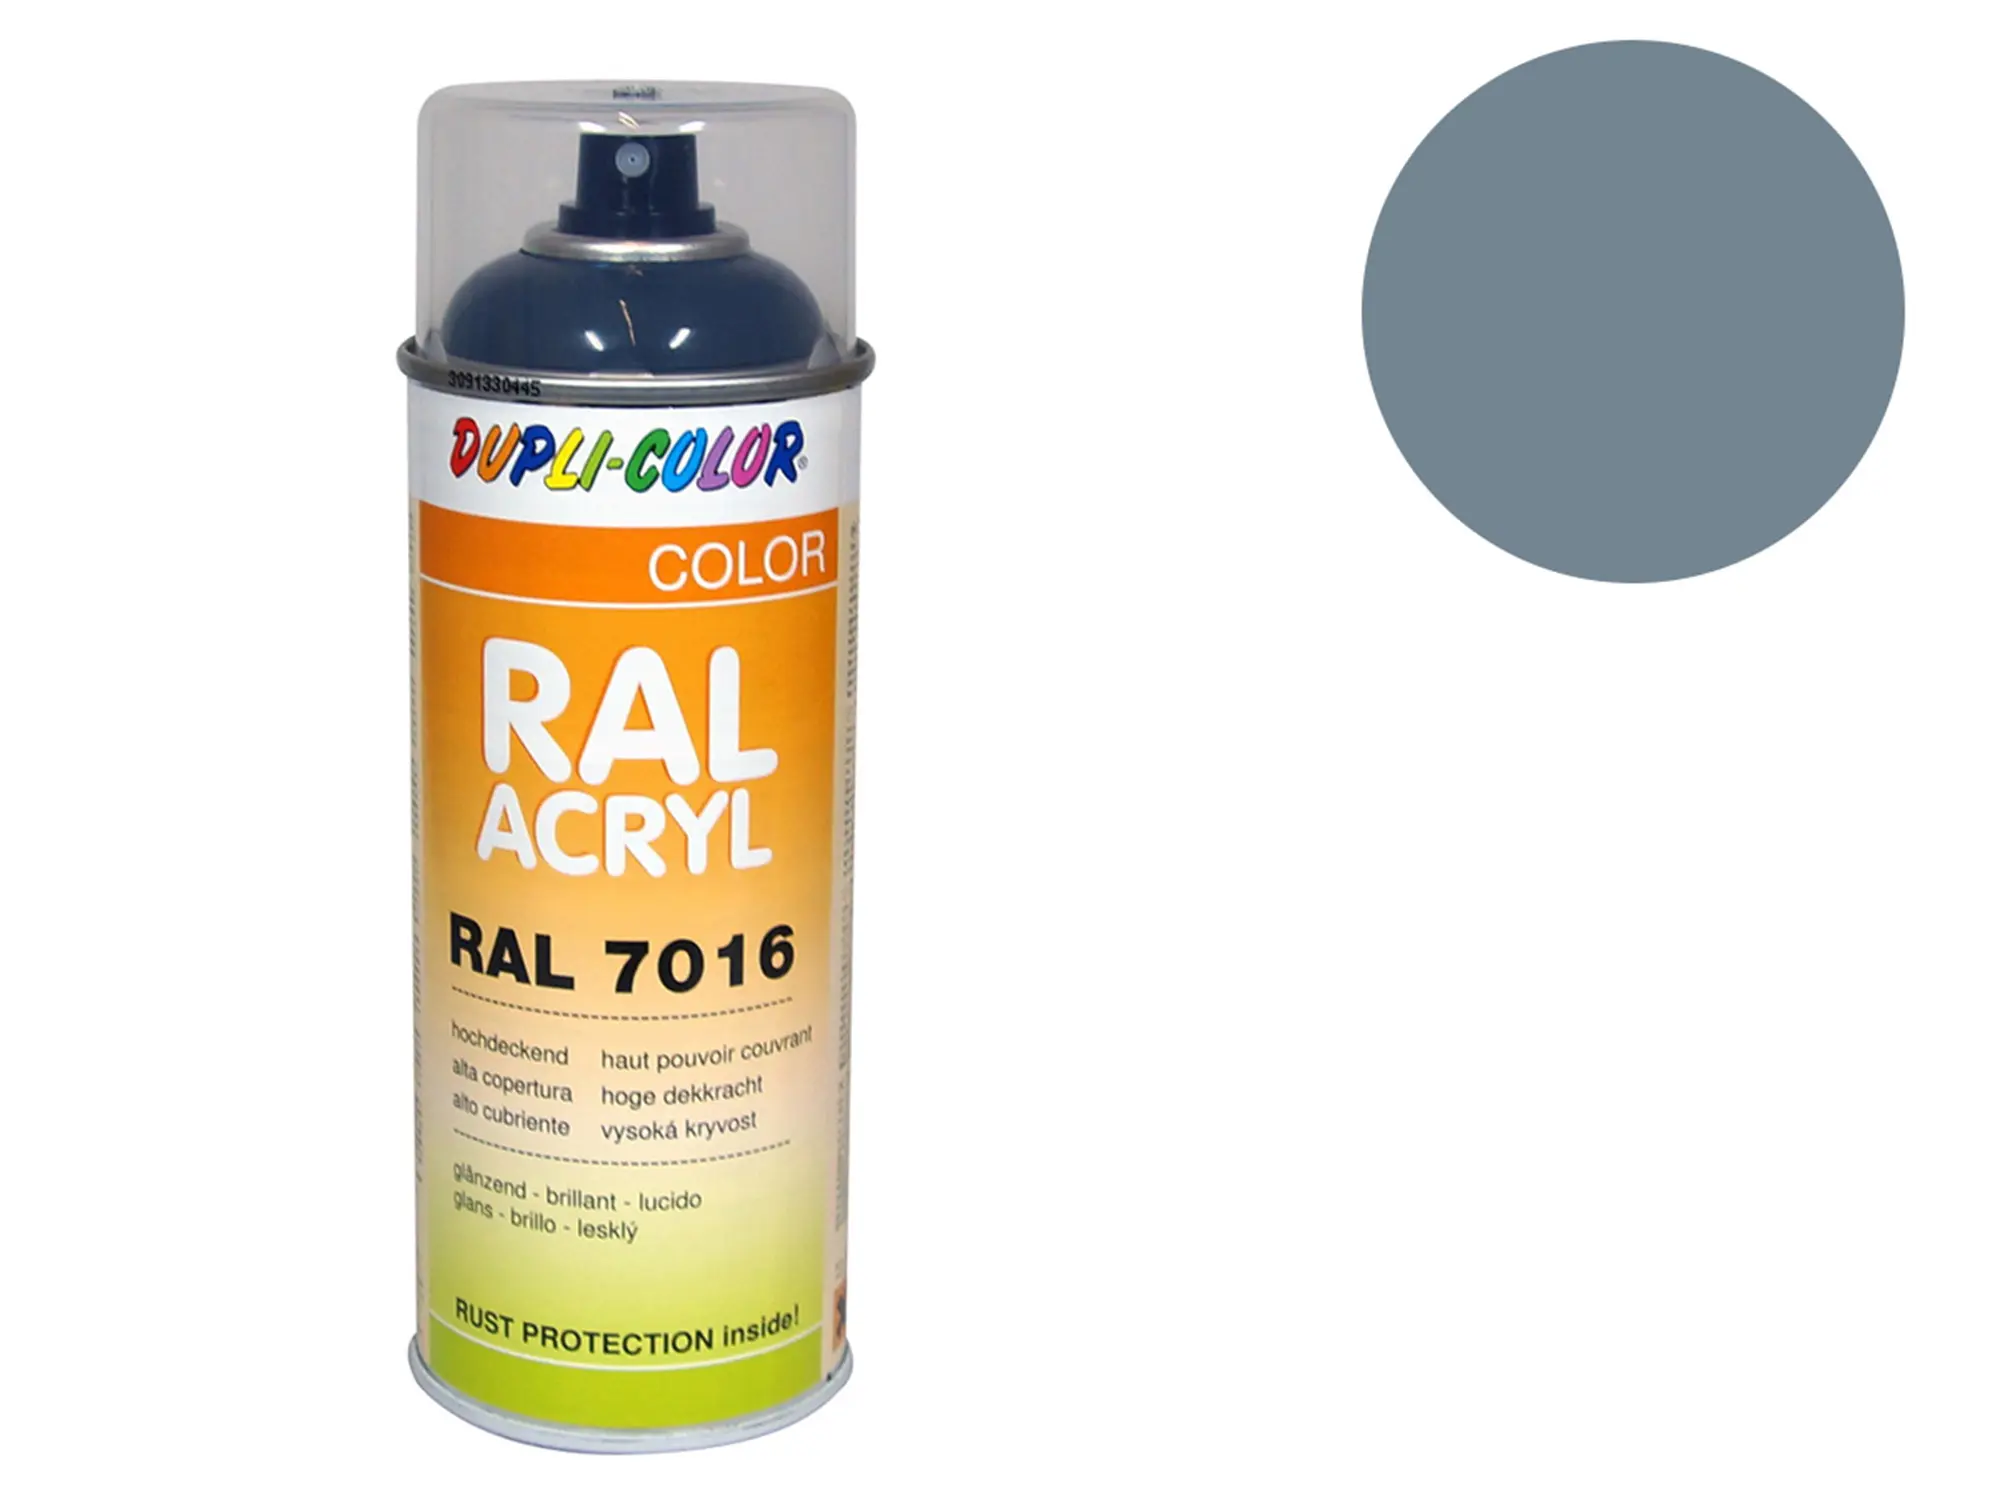 Dupli-Color Acryl-Spray RAL 7000 fehgrau, glänzend - 400 ml, Art.-Nr.: 10064832 - Bild 1